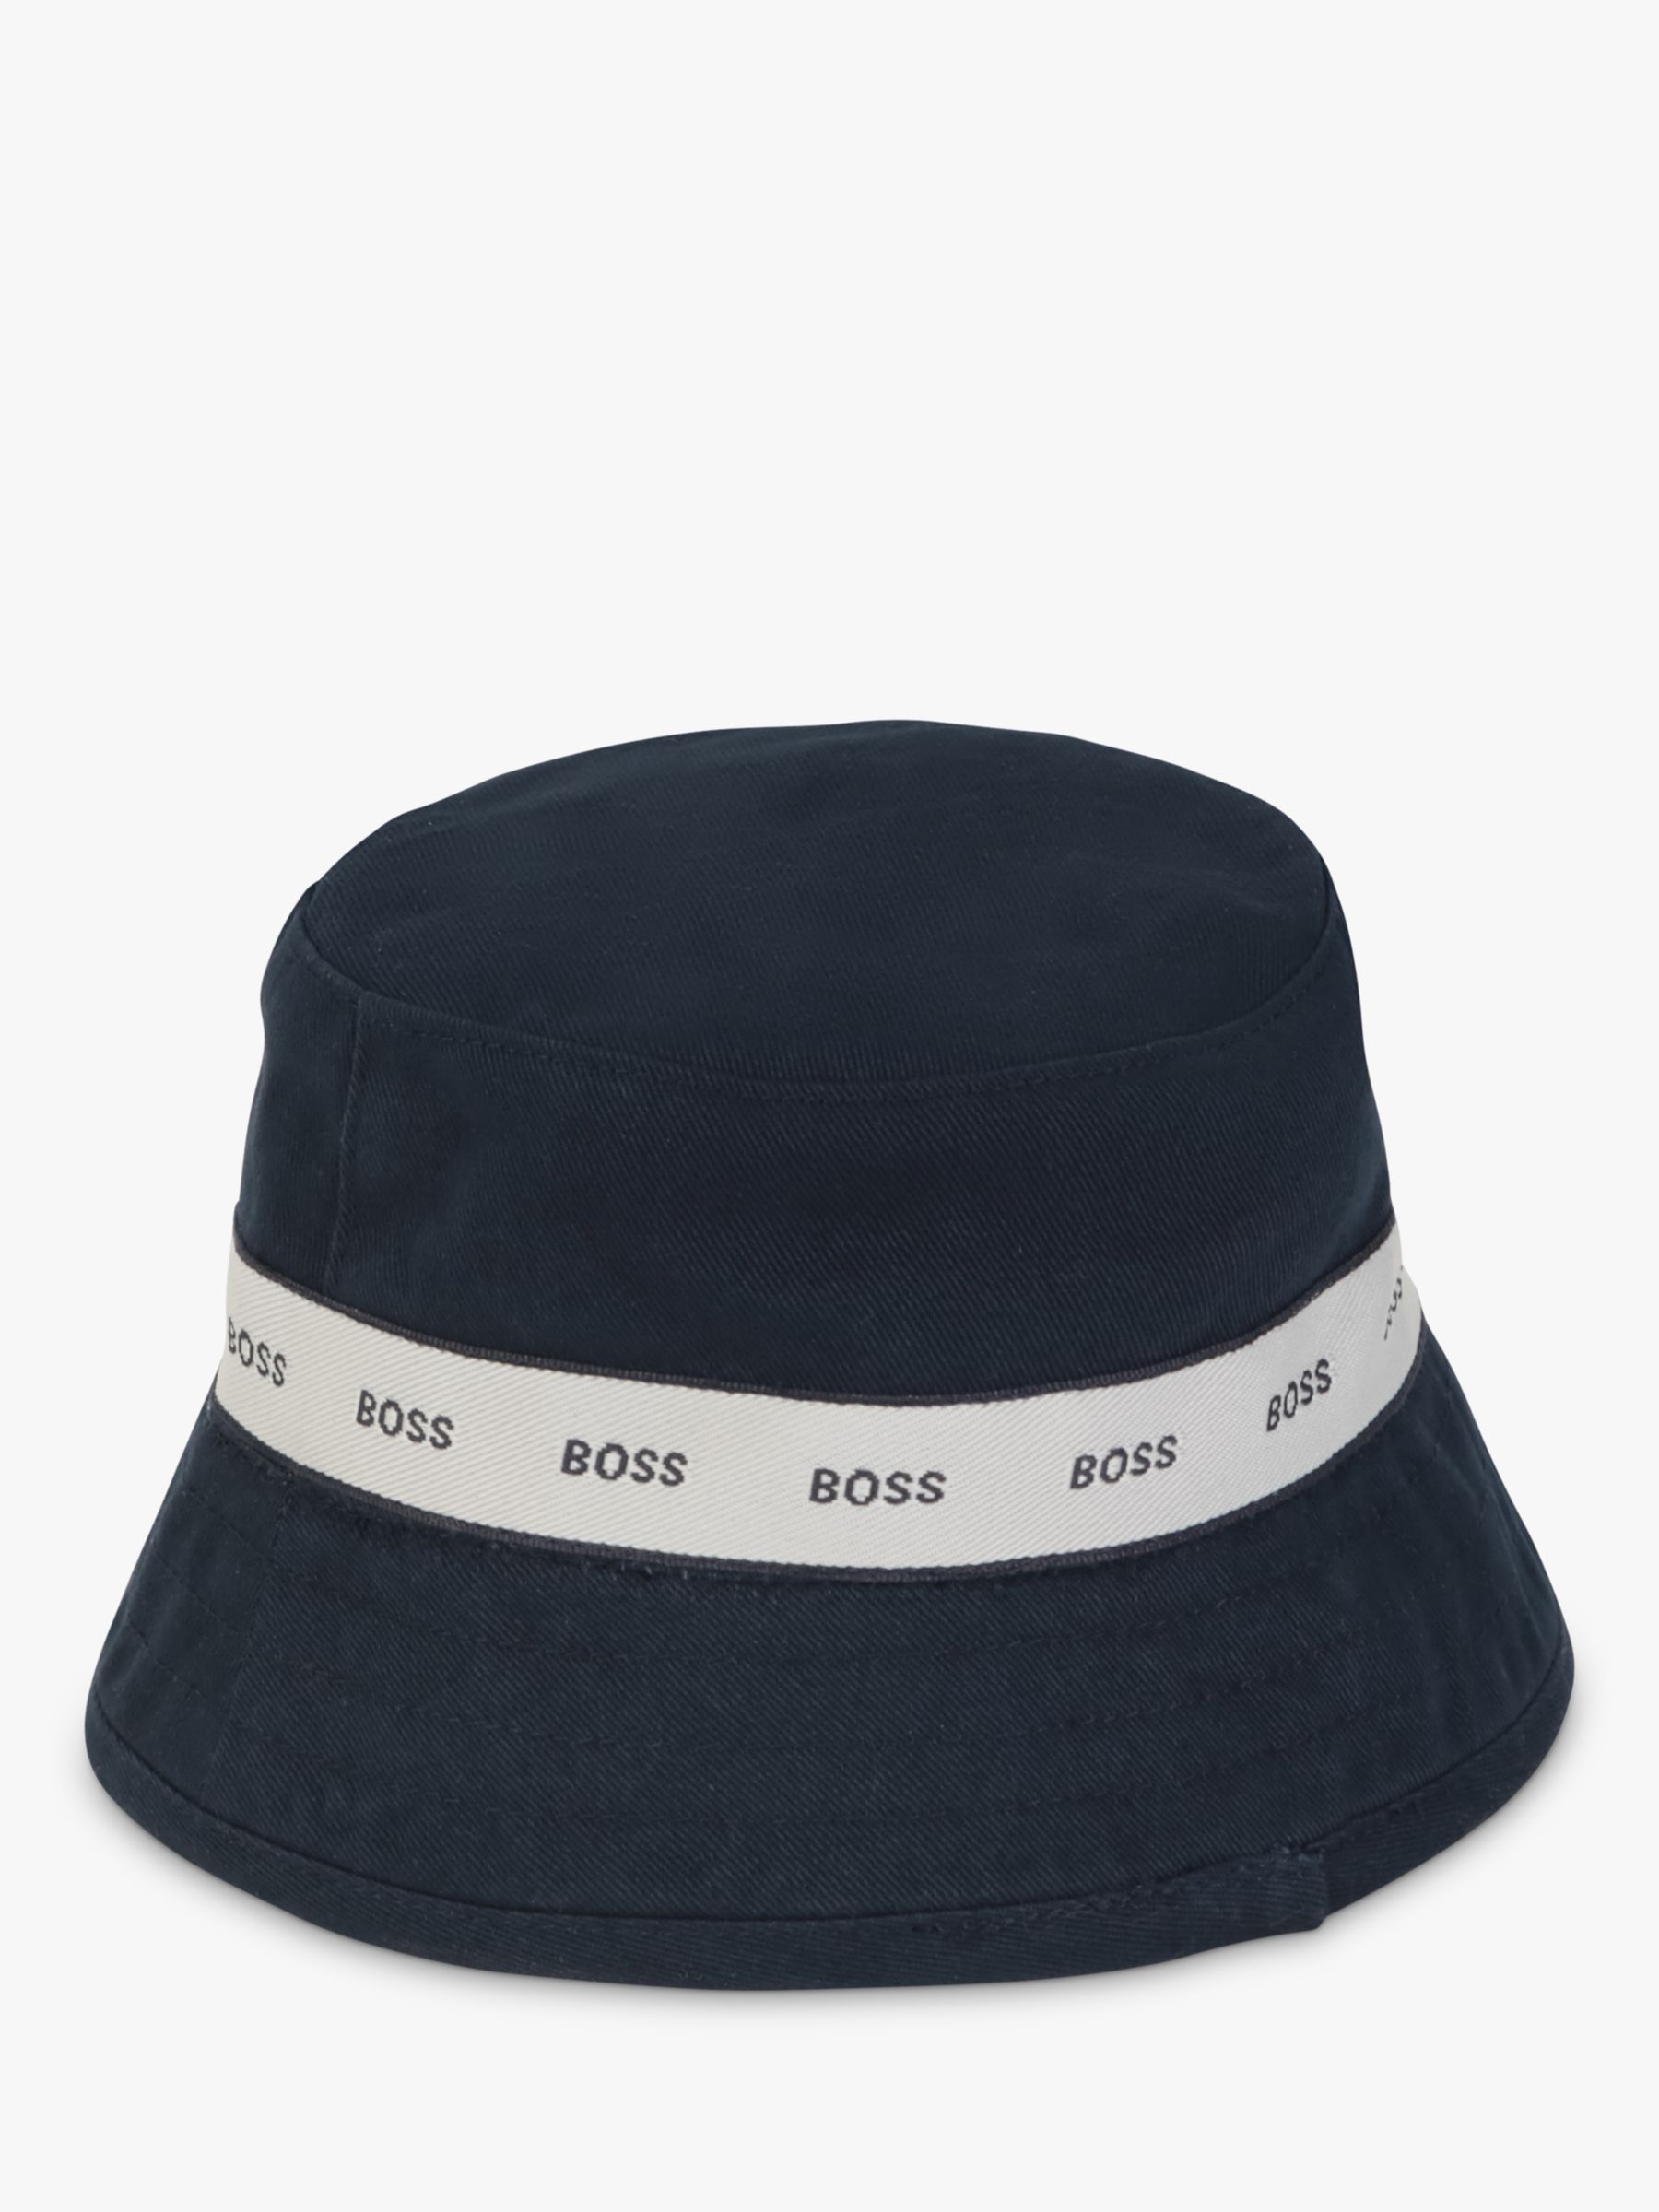 HUGO BOSS Baby Reversible Bucket Hat, Blue Cargo, 6 months